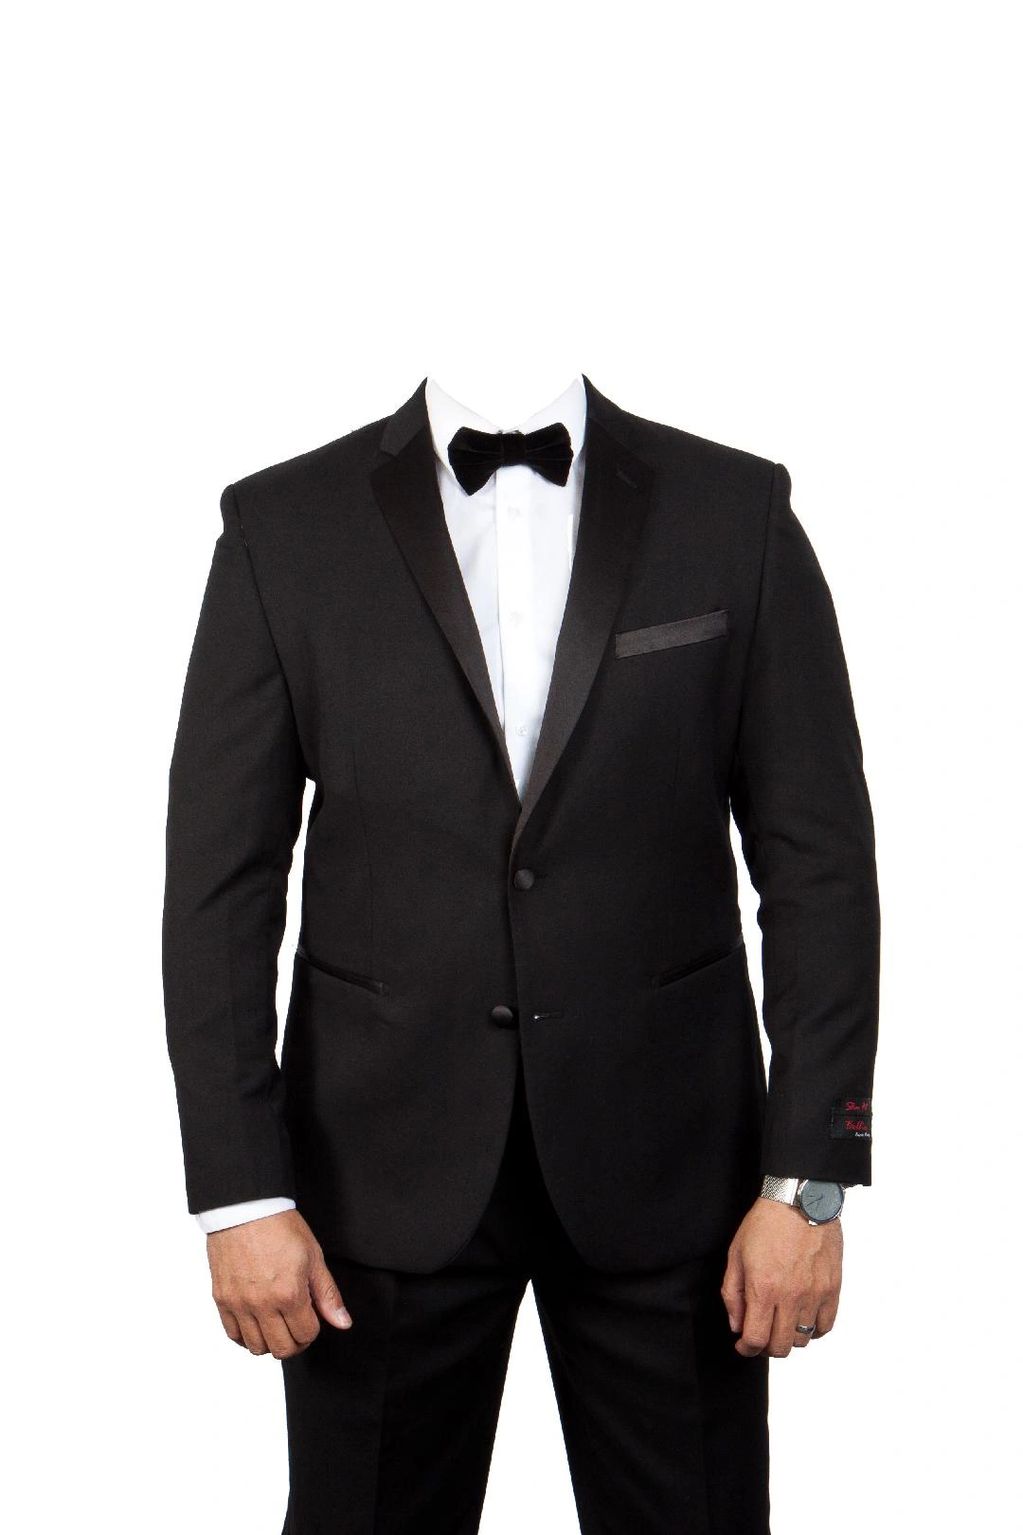 Black Notch Tuxedo 4pc $ 199.99
Colors: Black and white 